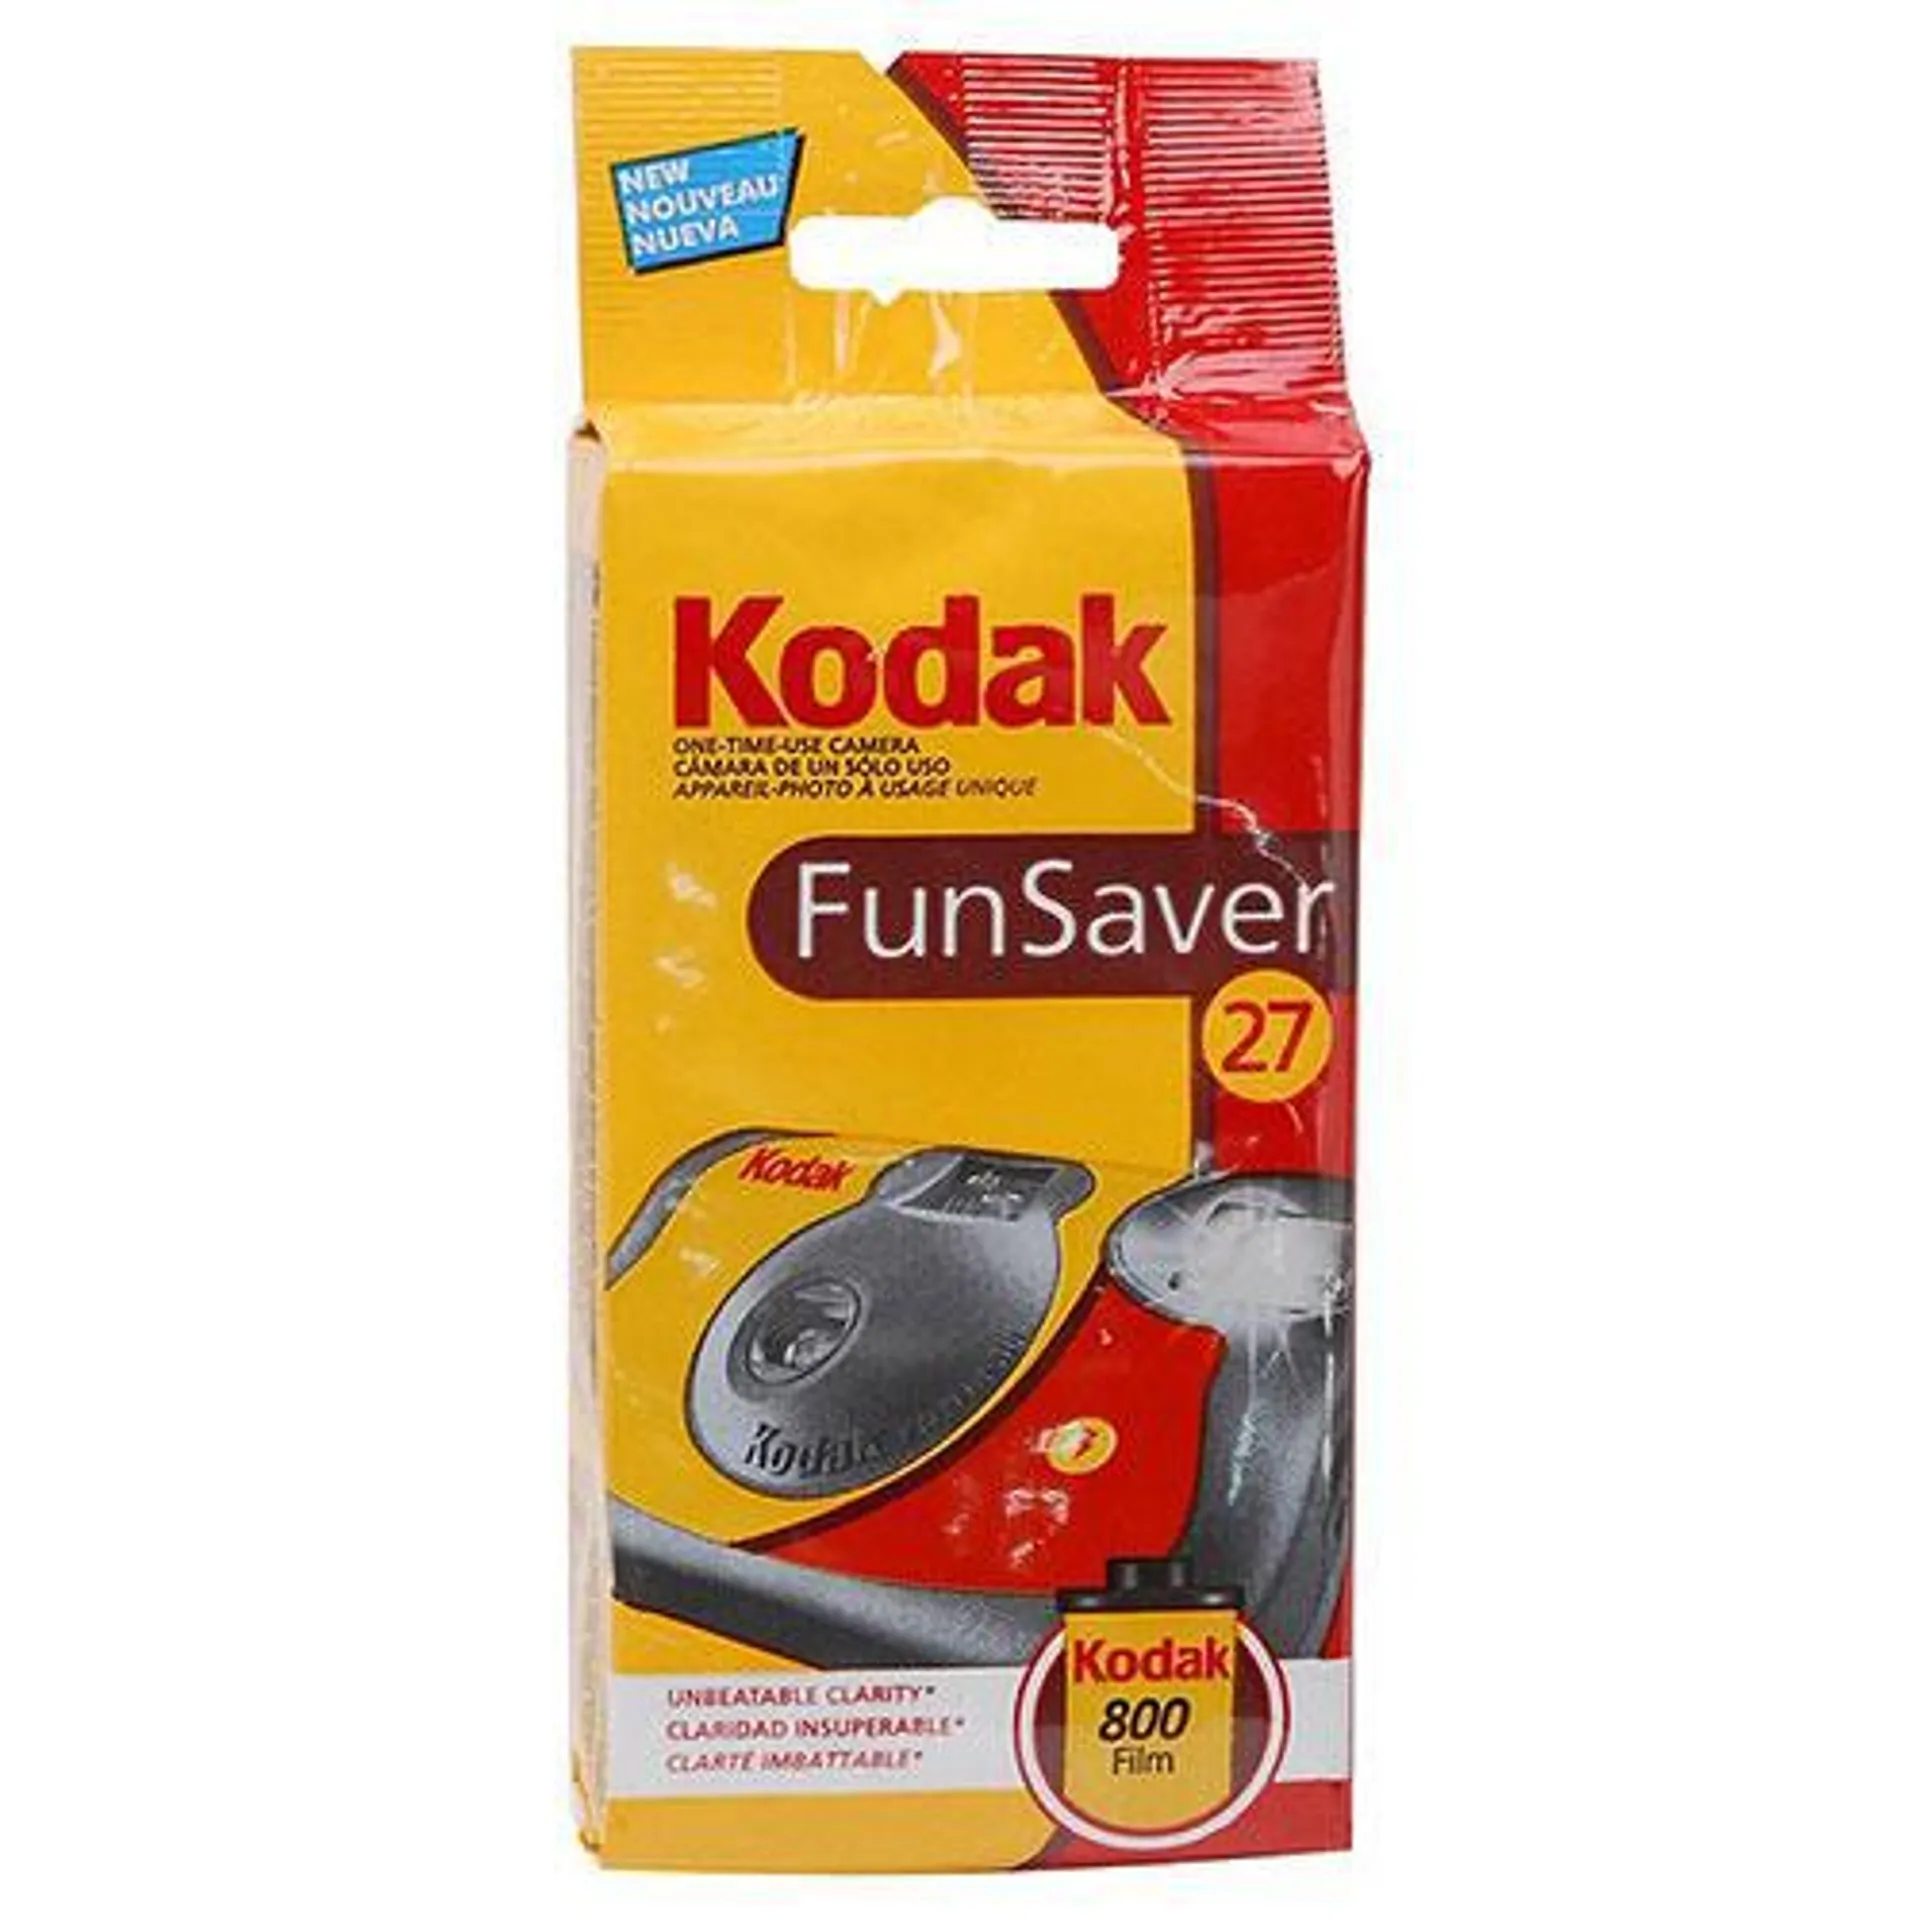 Kodak FunSaver 35mm Single Use Camera with 27 Exposures